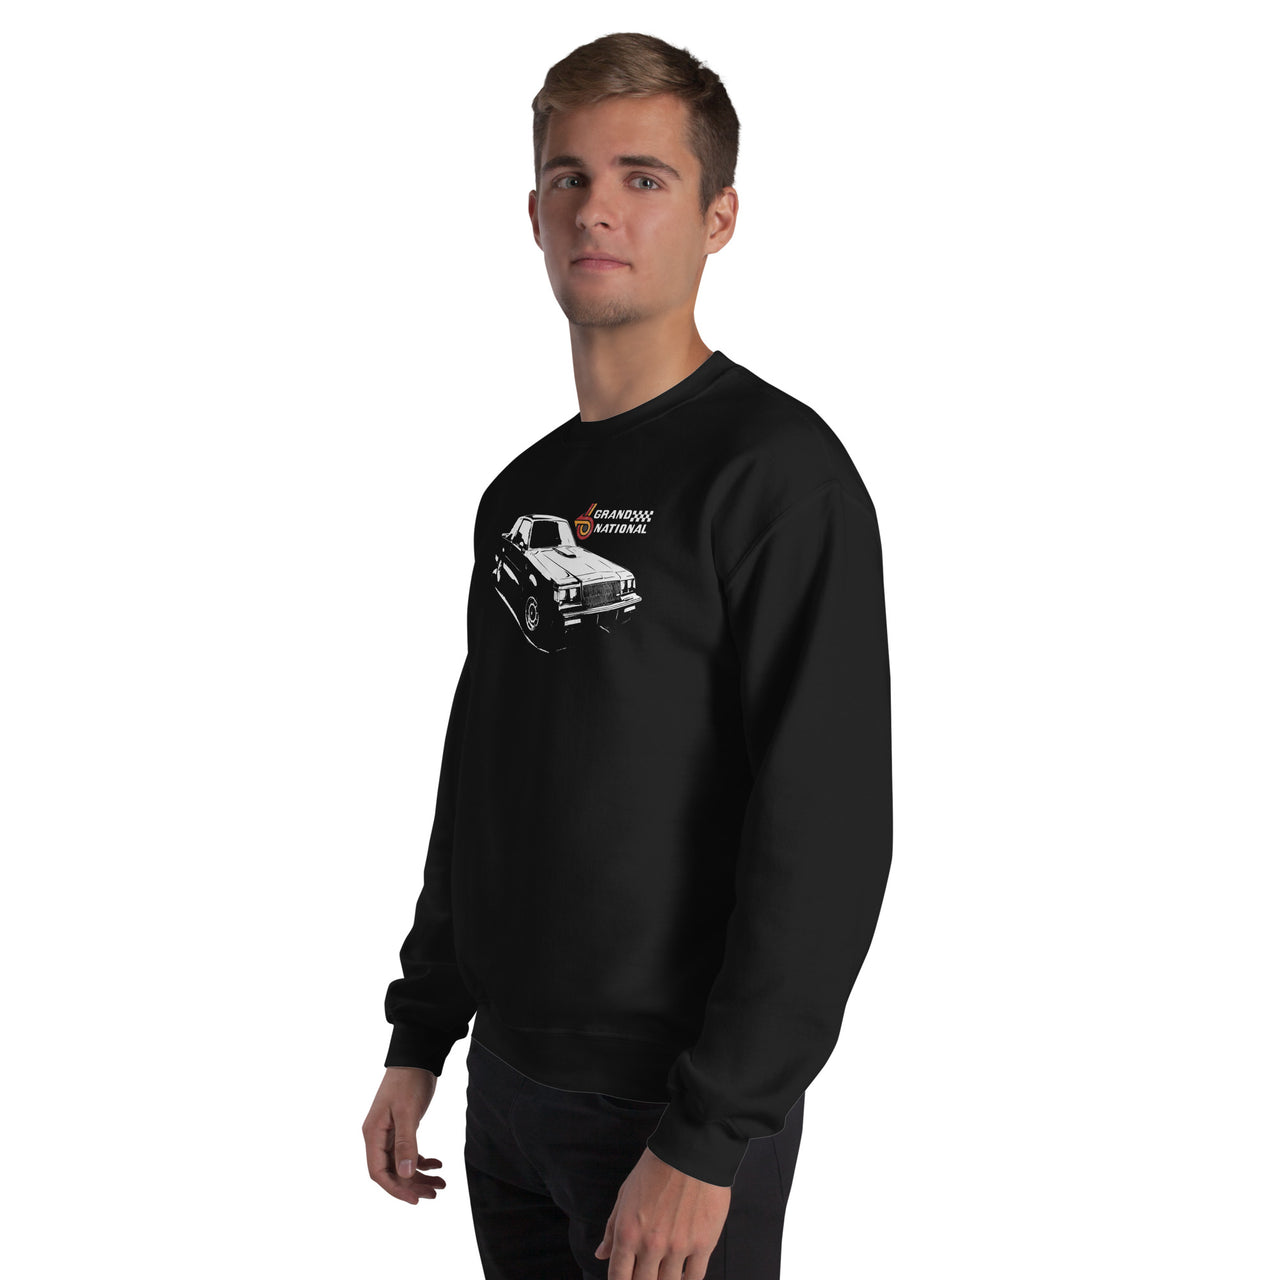 Grand National Crew Neck Sweatshirt modeled in black - left view